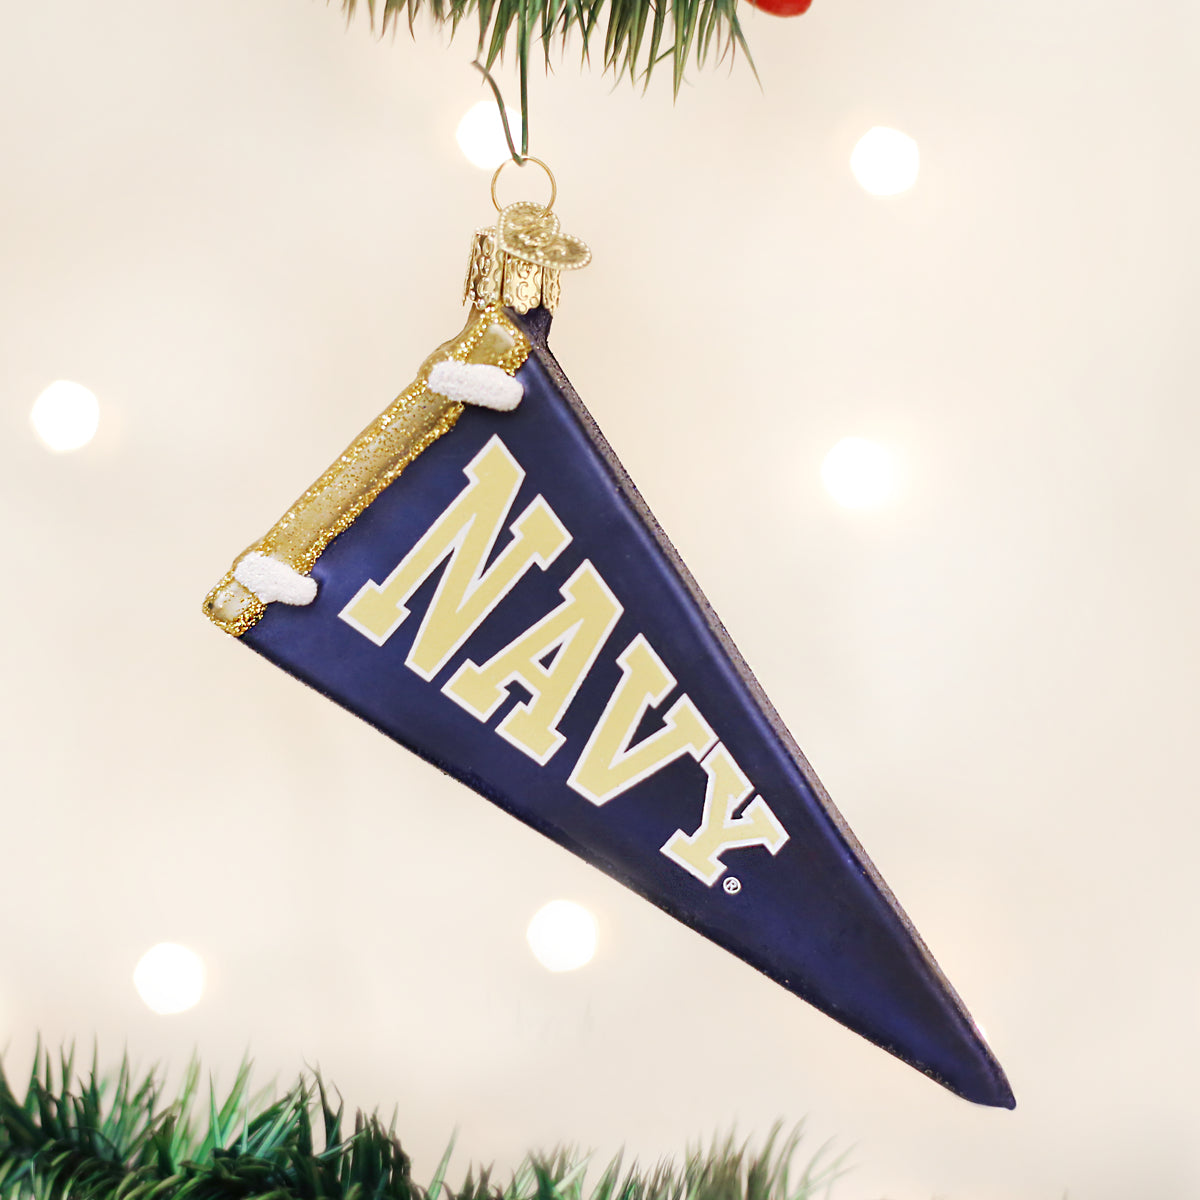 Navy Pennant Ornament